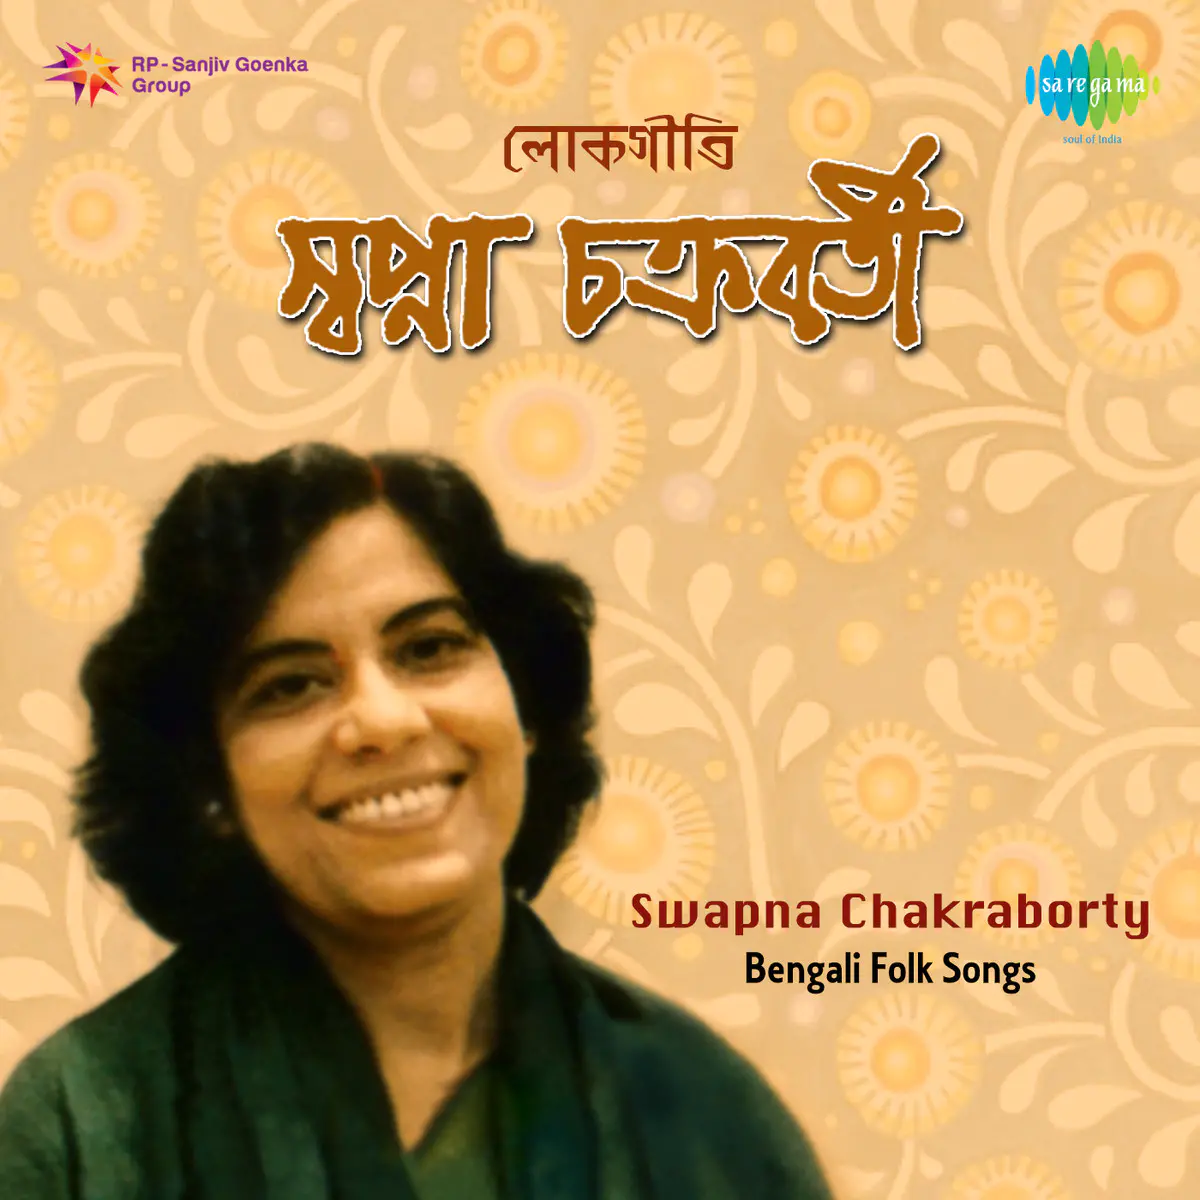 Swapna Chakraborty Lokgeeti Songs Download Swapna Chakraborty Lokgeeti Mp3 Bengali Songs Online Free On Gaana Com 205 likes · 26 talking about this. swapna chakraborty lokgeeti songs